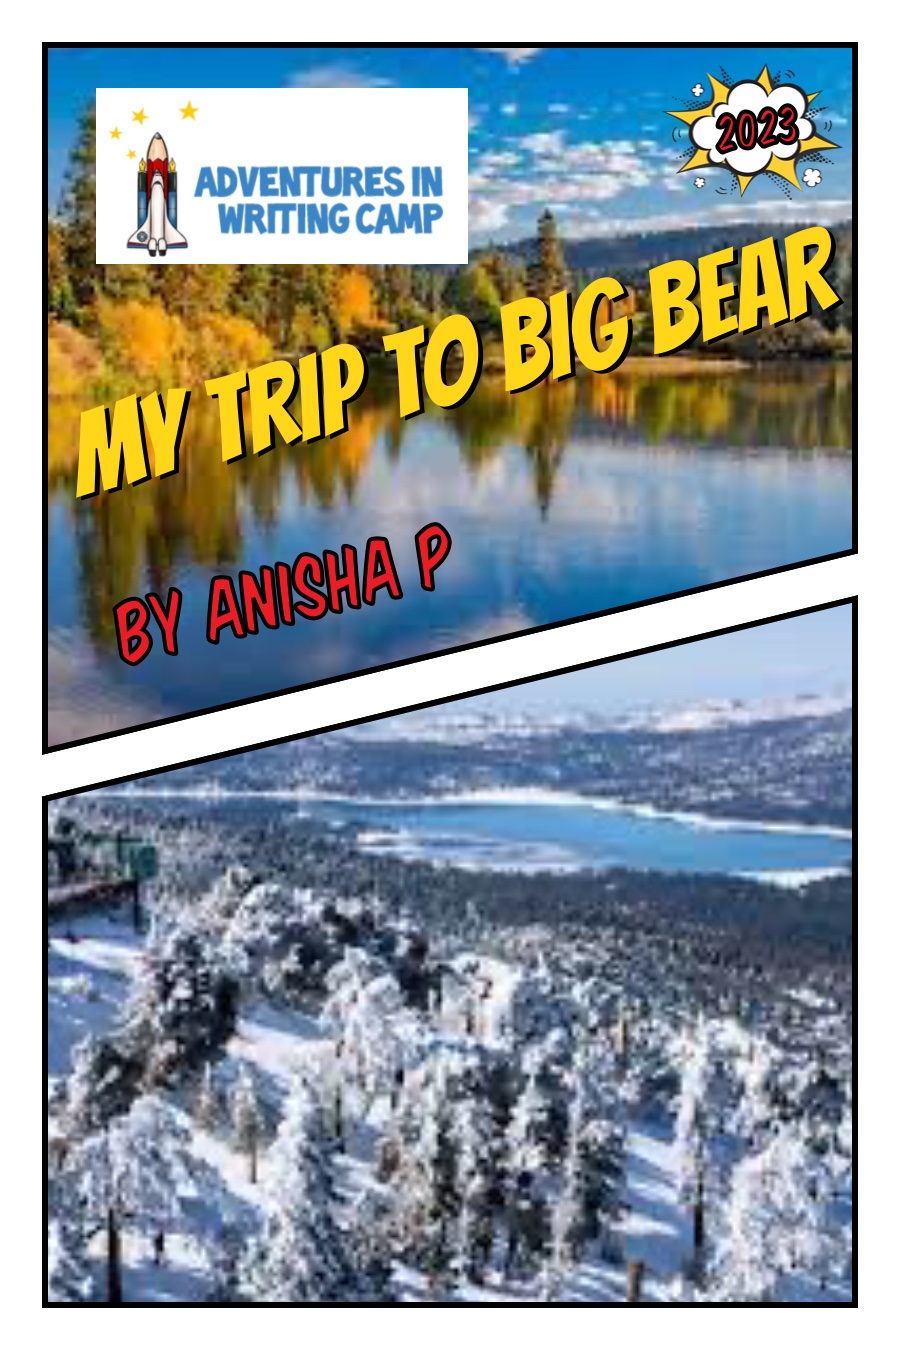 My Trip to Big Bear by Anisha P